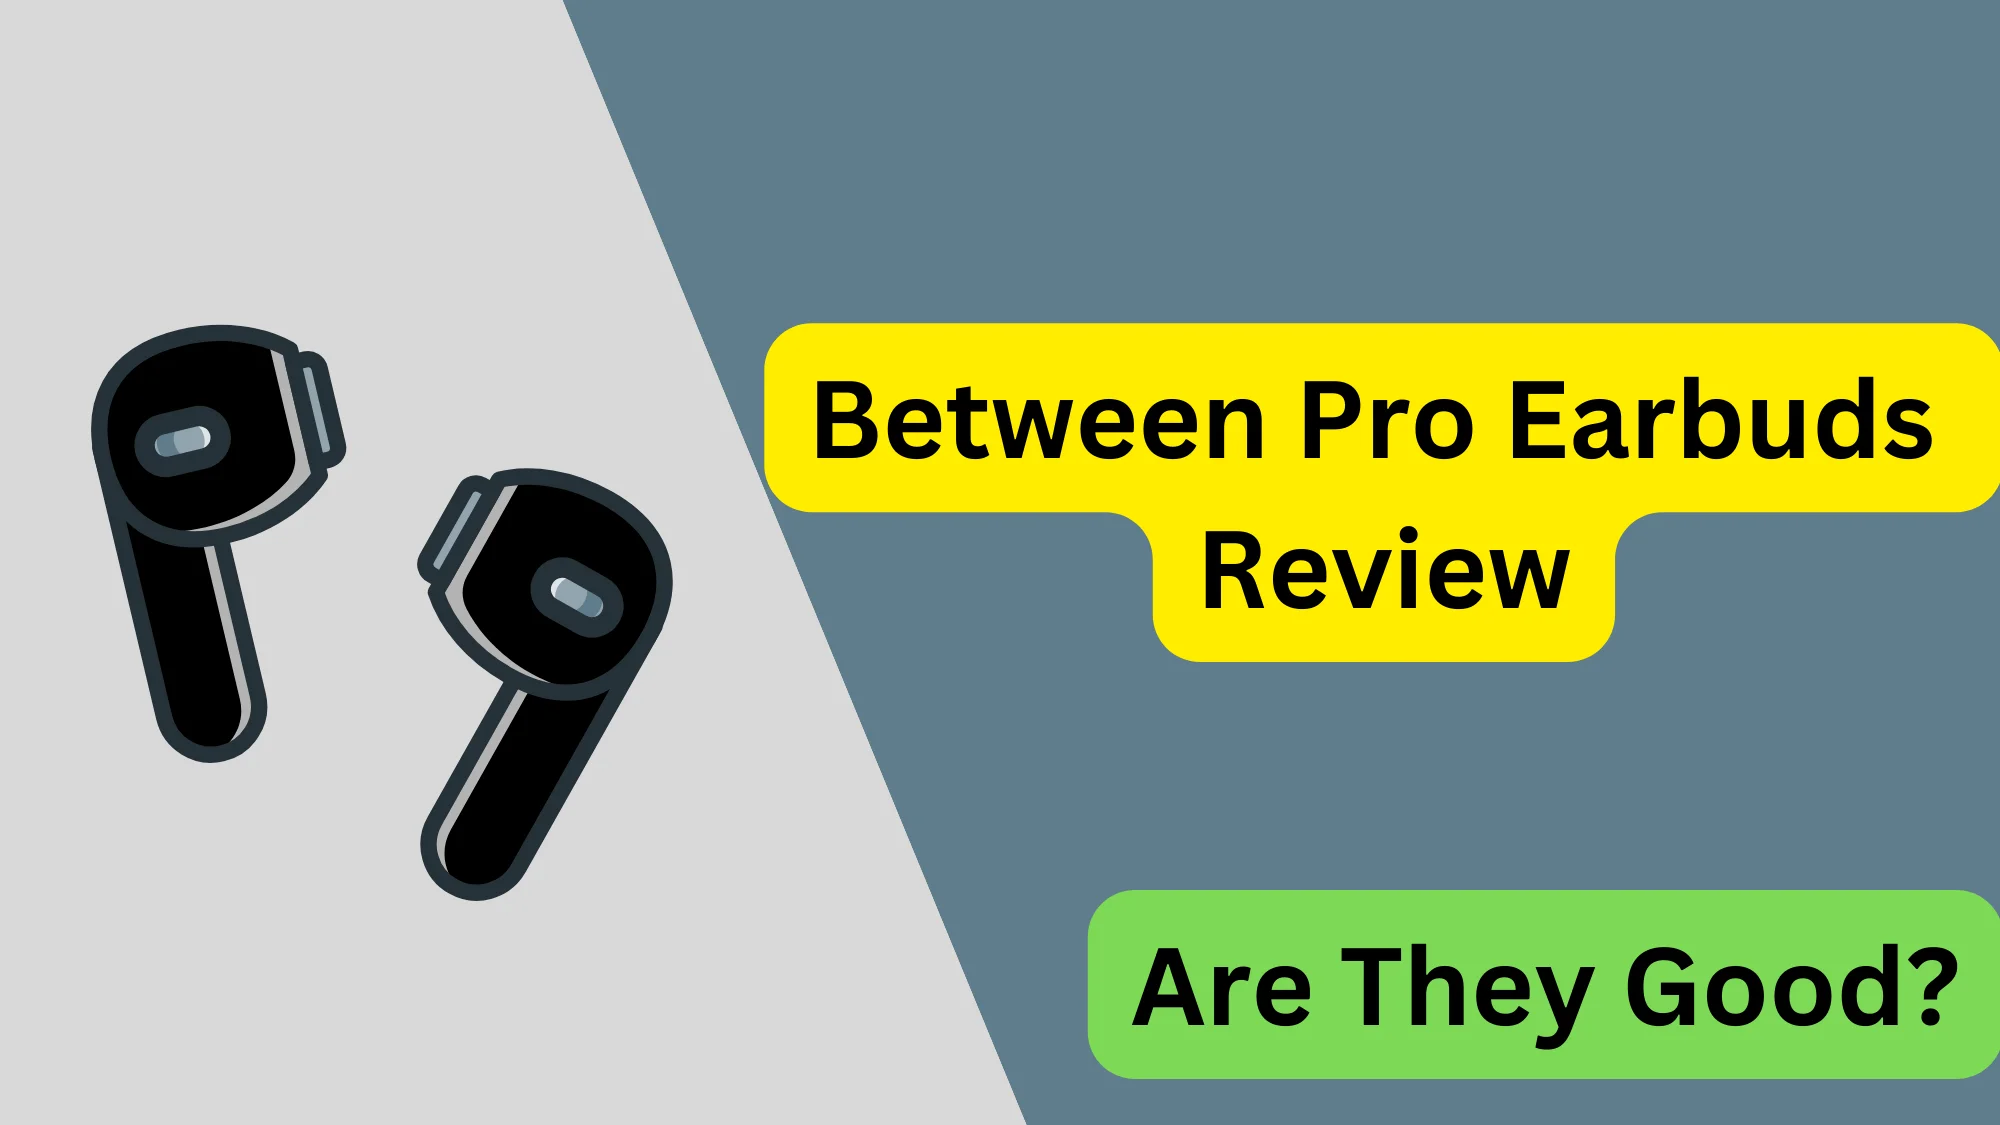 Between Pro Earbuds Review